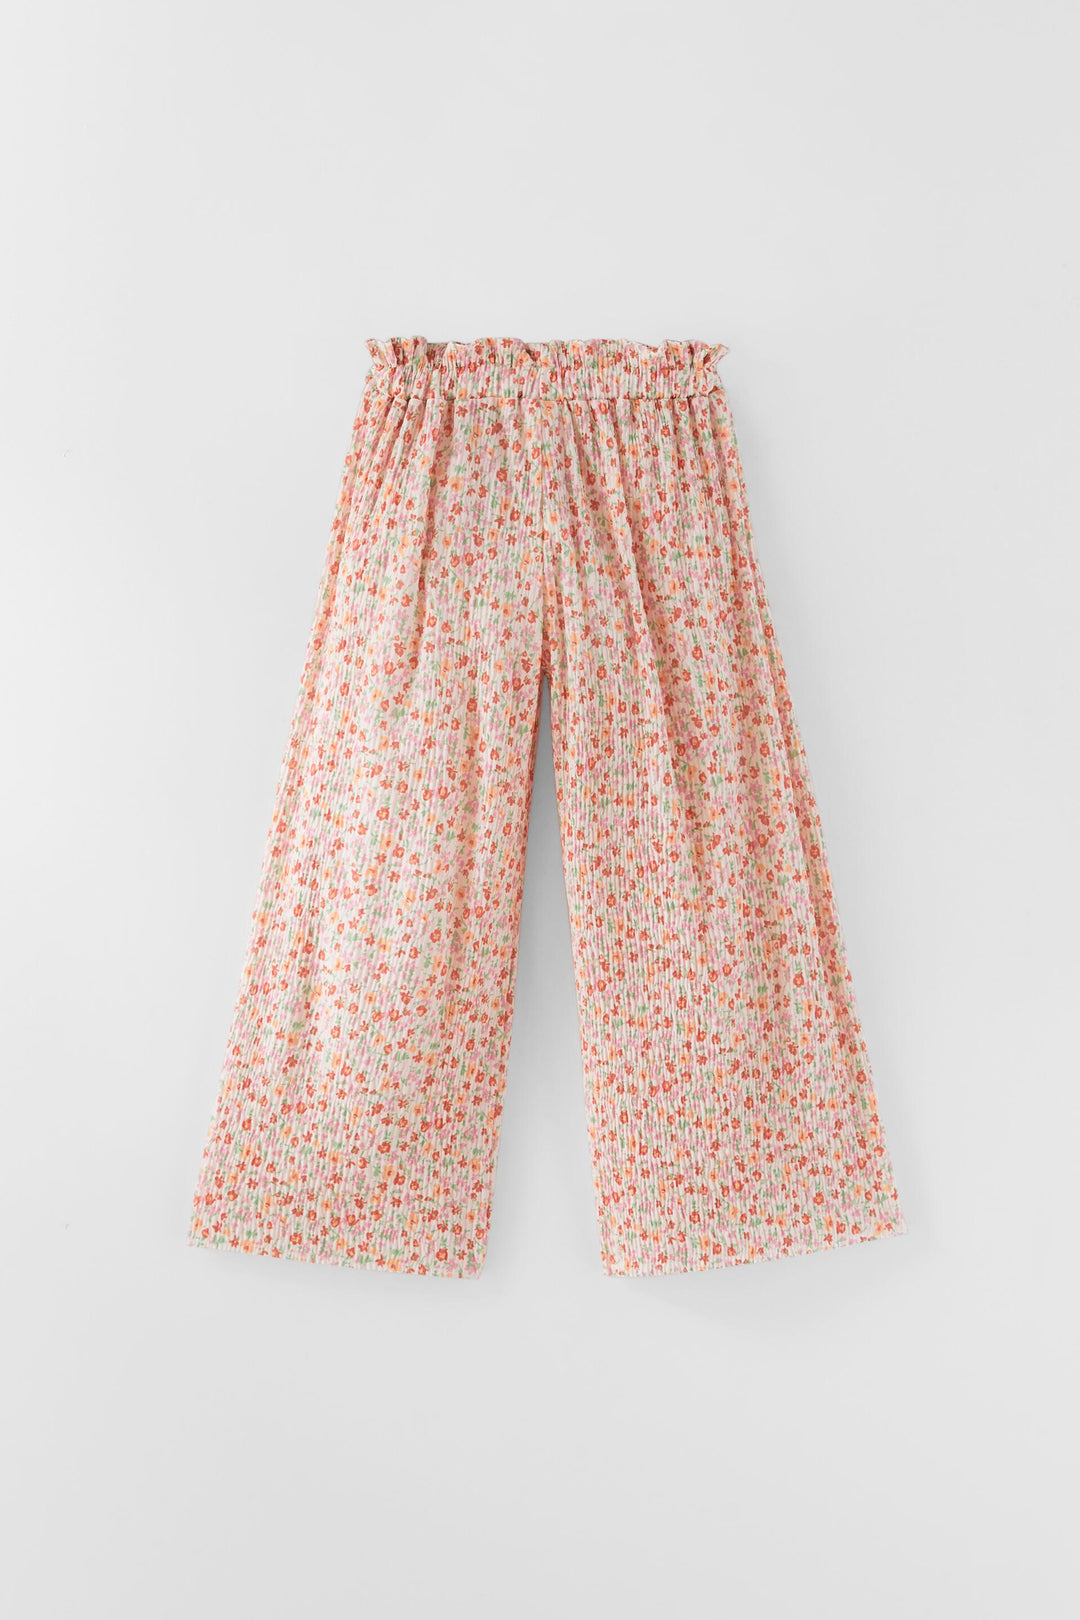 Pantalon marque_Zara, genre_Fille, Enfant Moudda Tunisie1